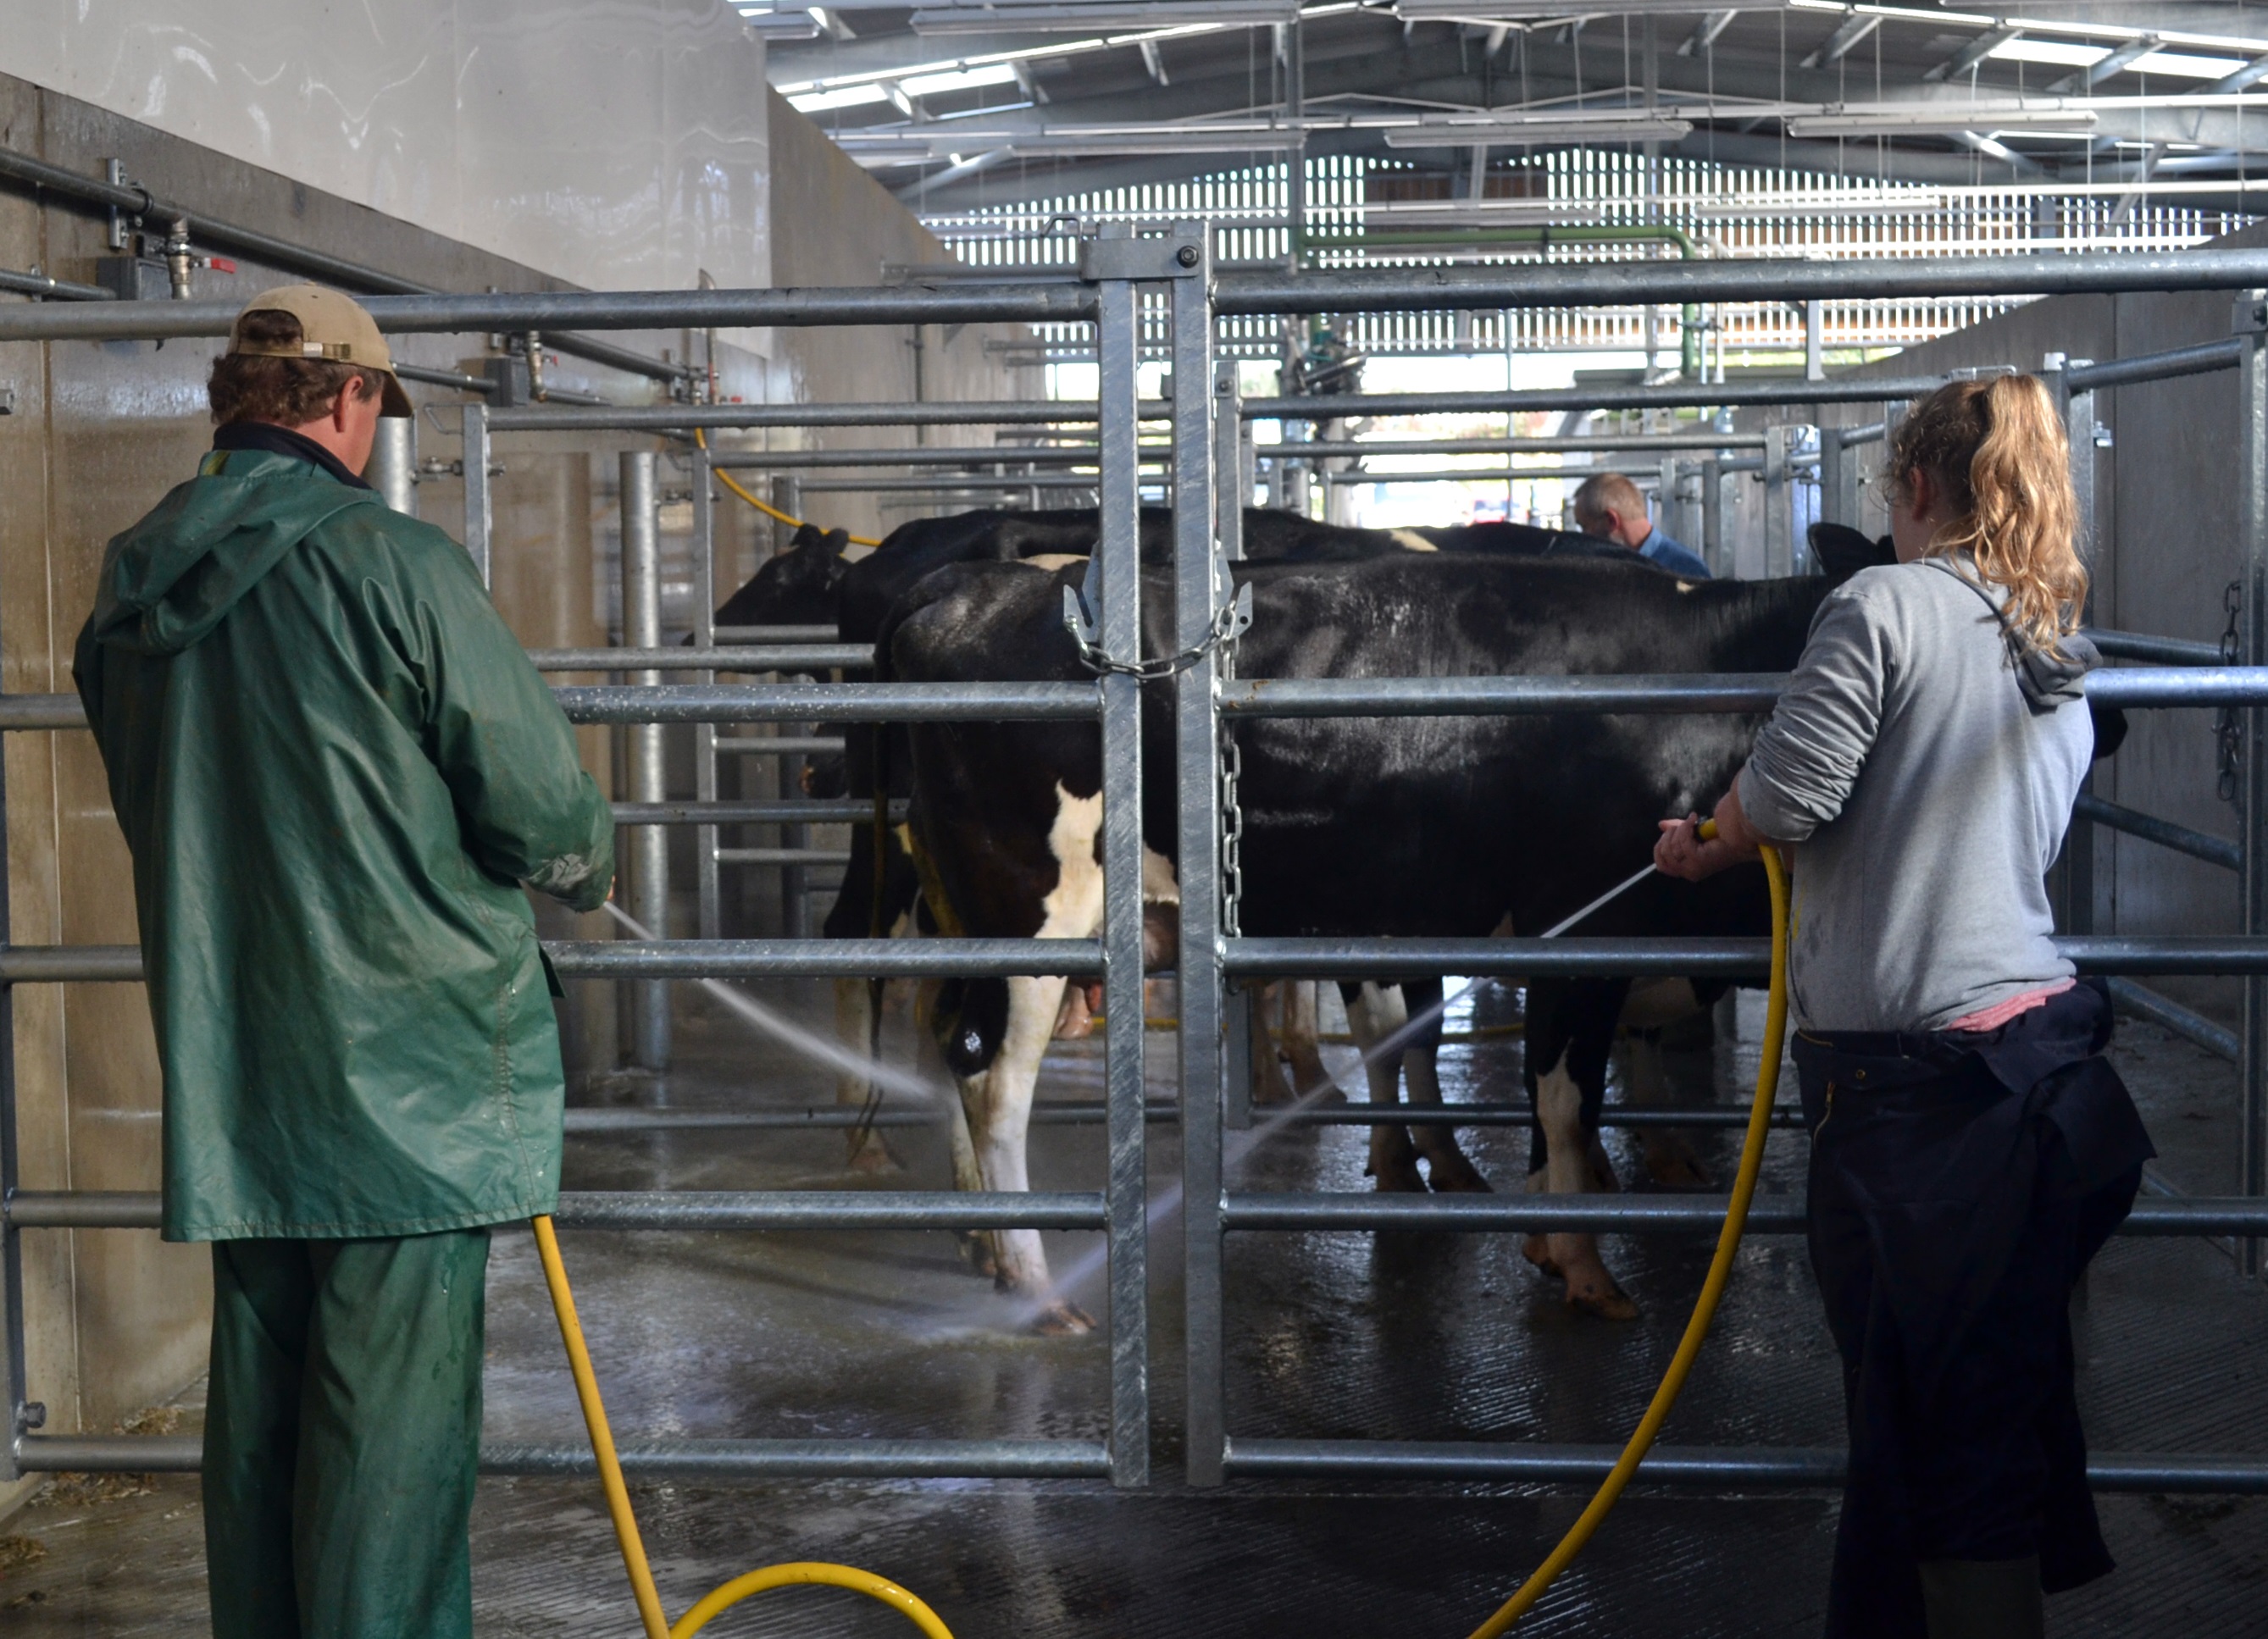 Staff cow washing at Holsworthy Livestock Market